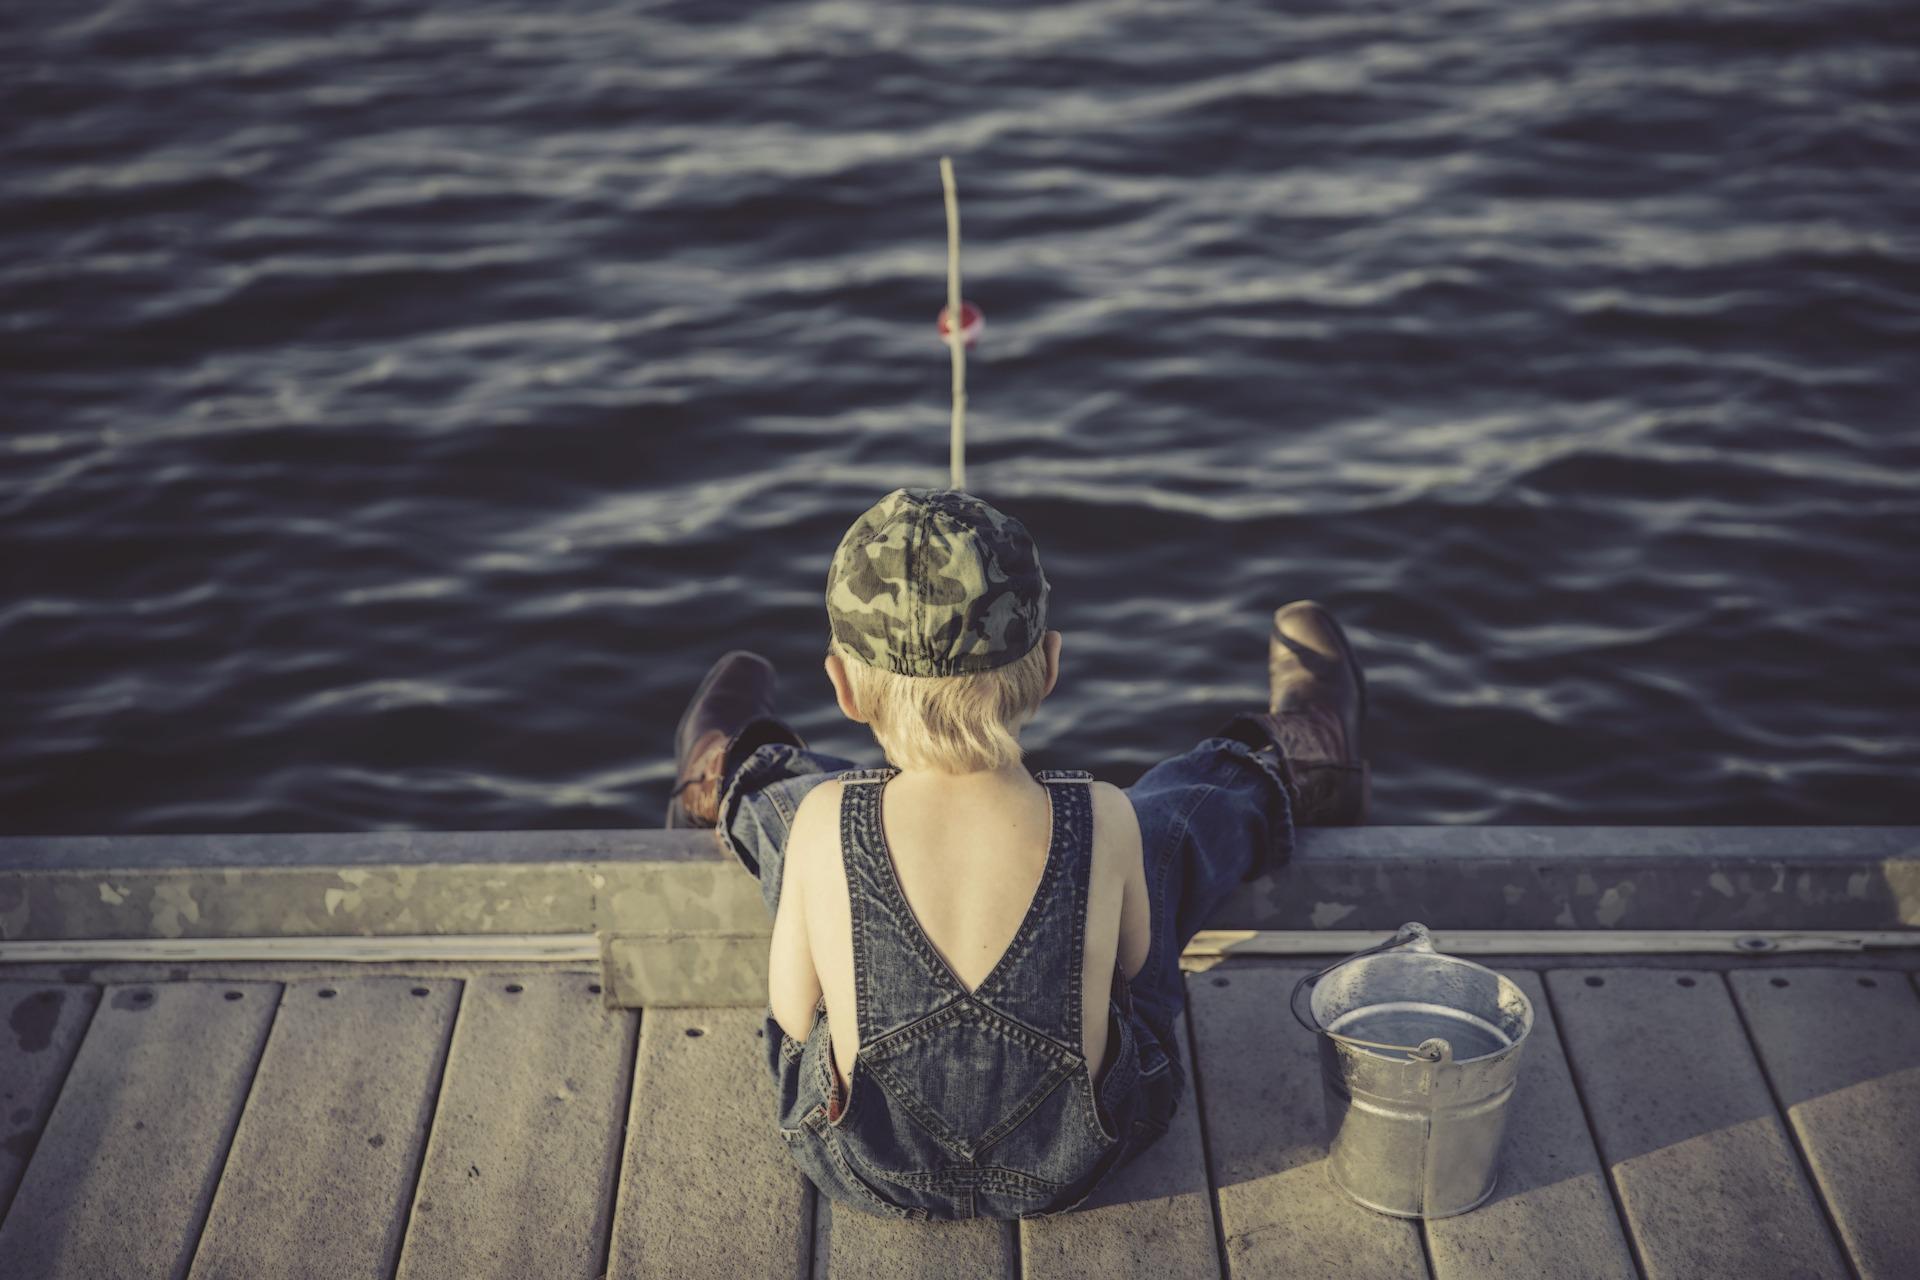 Turnir sportskih ribolovaca “Sektorski metod feeder cup” u Plandištu